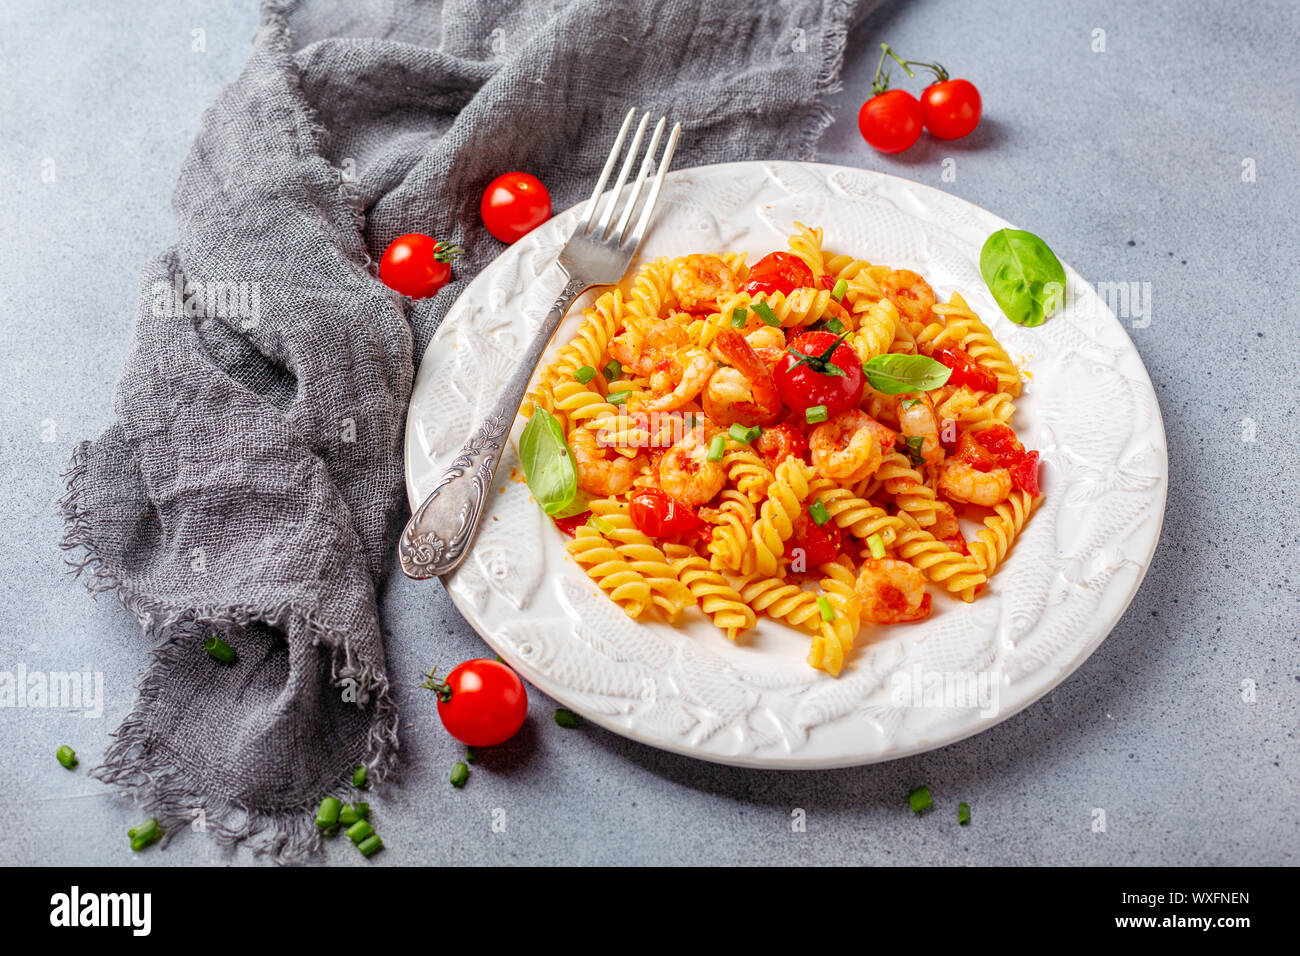 Pasta with shrimp in tomato sauce. Stock Photo